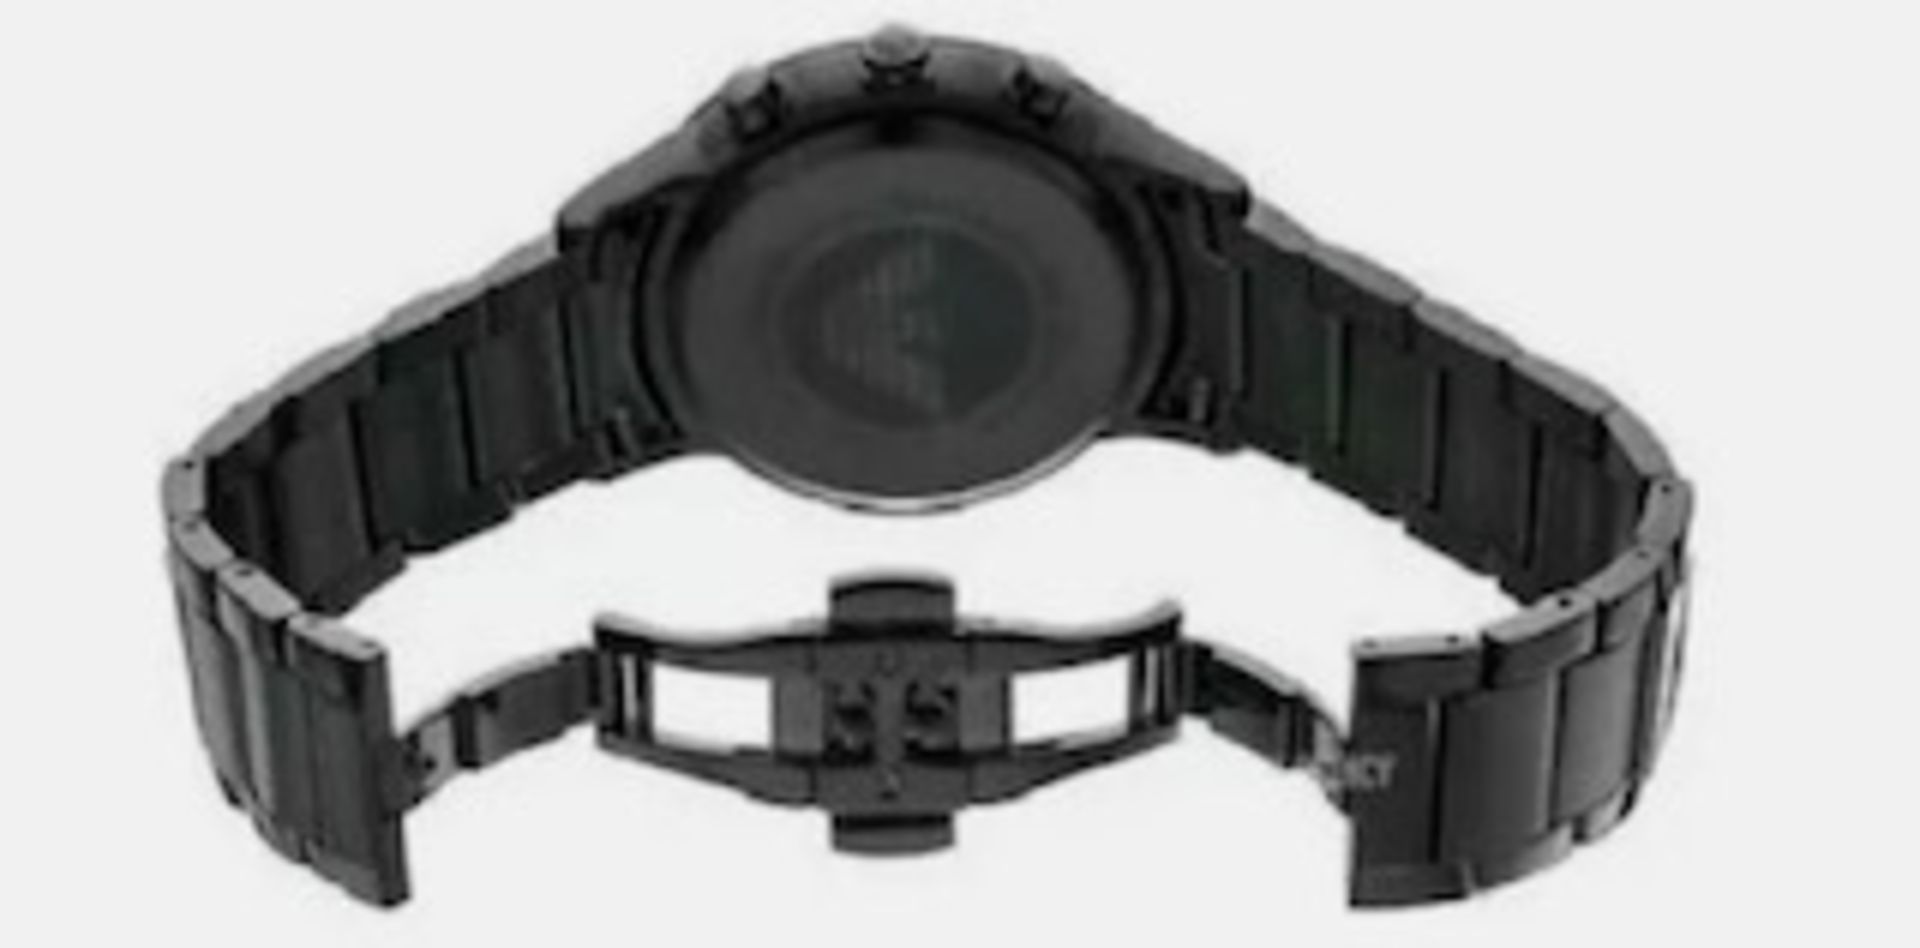 Emporio Armani AR2453 Men's Black Stainless Steel Bracelet Chronograph Watch - Image 3 of 6